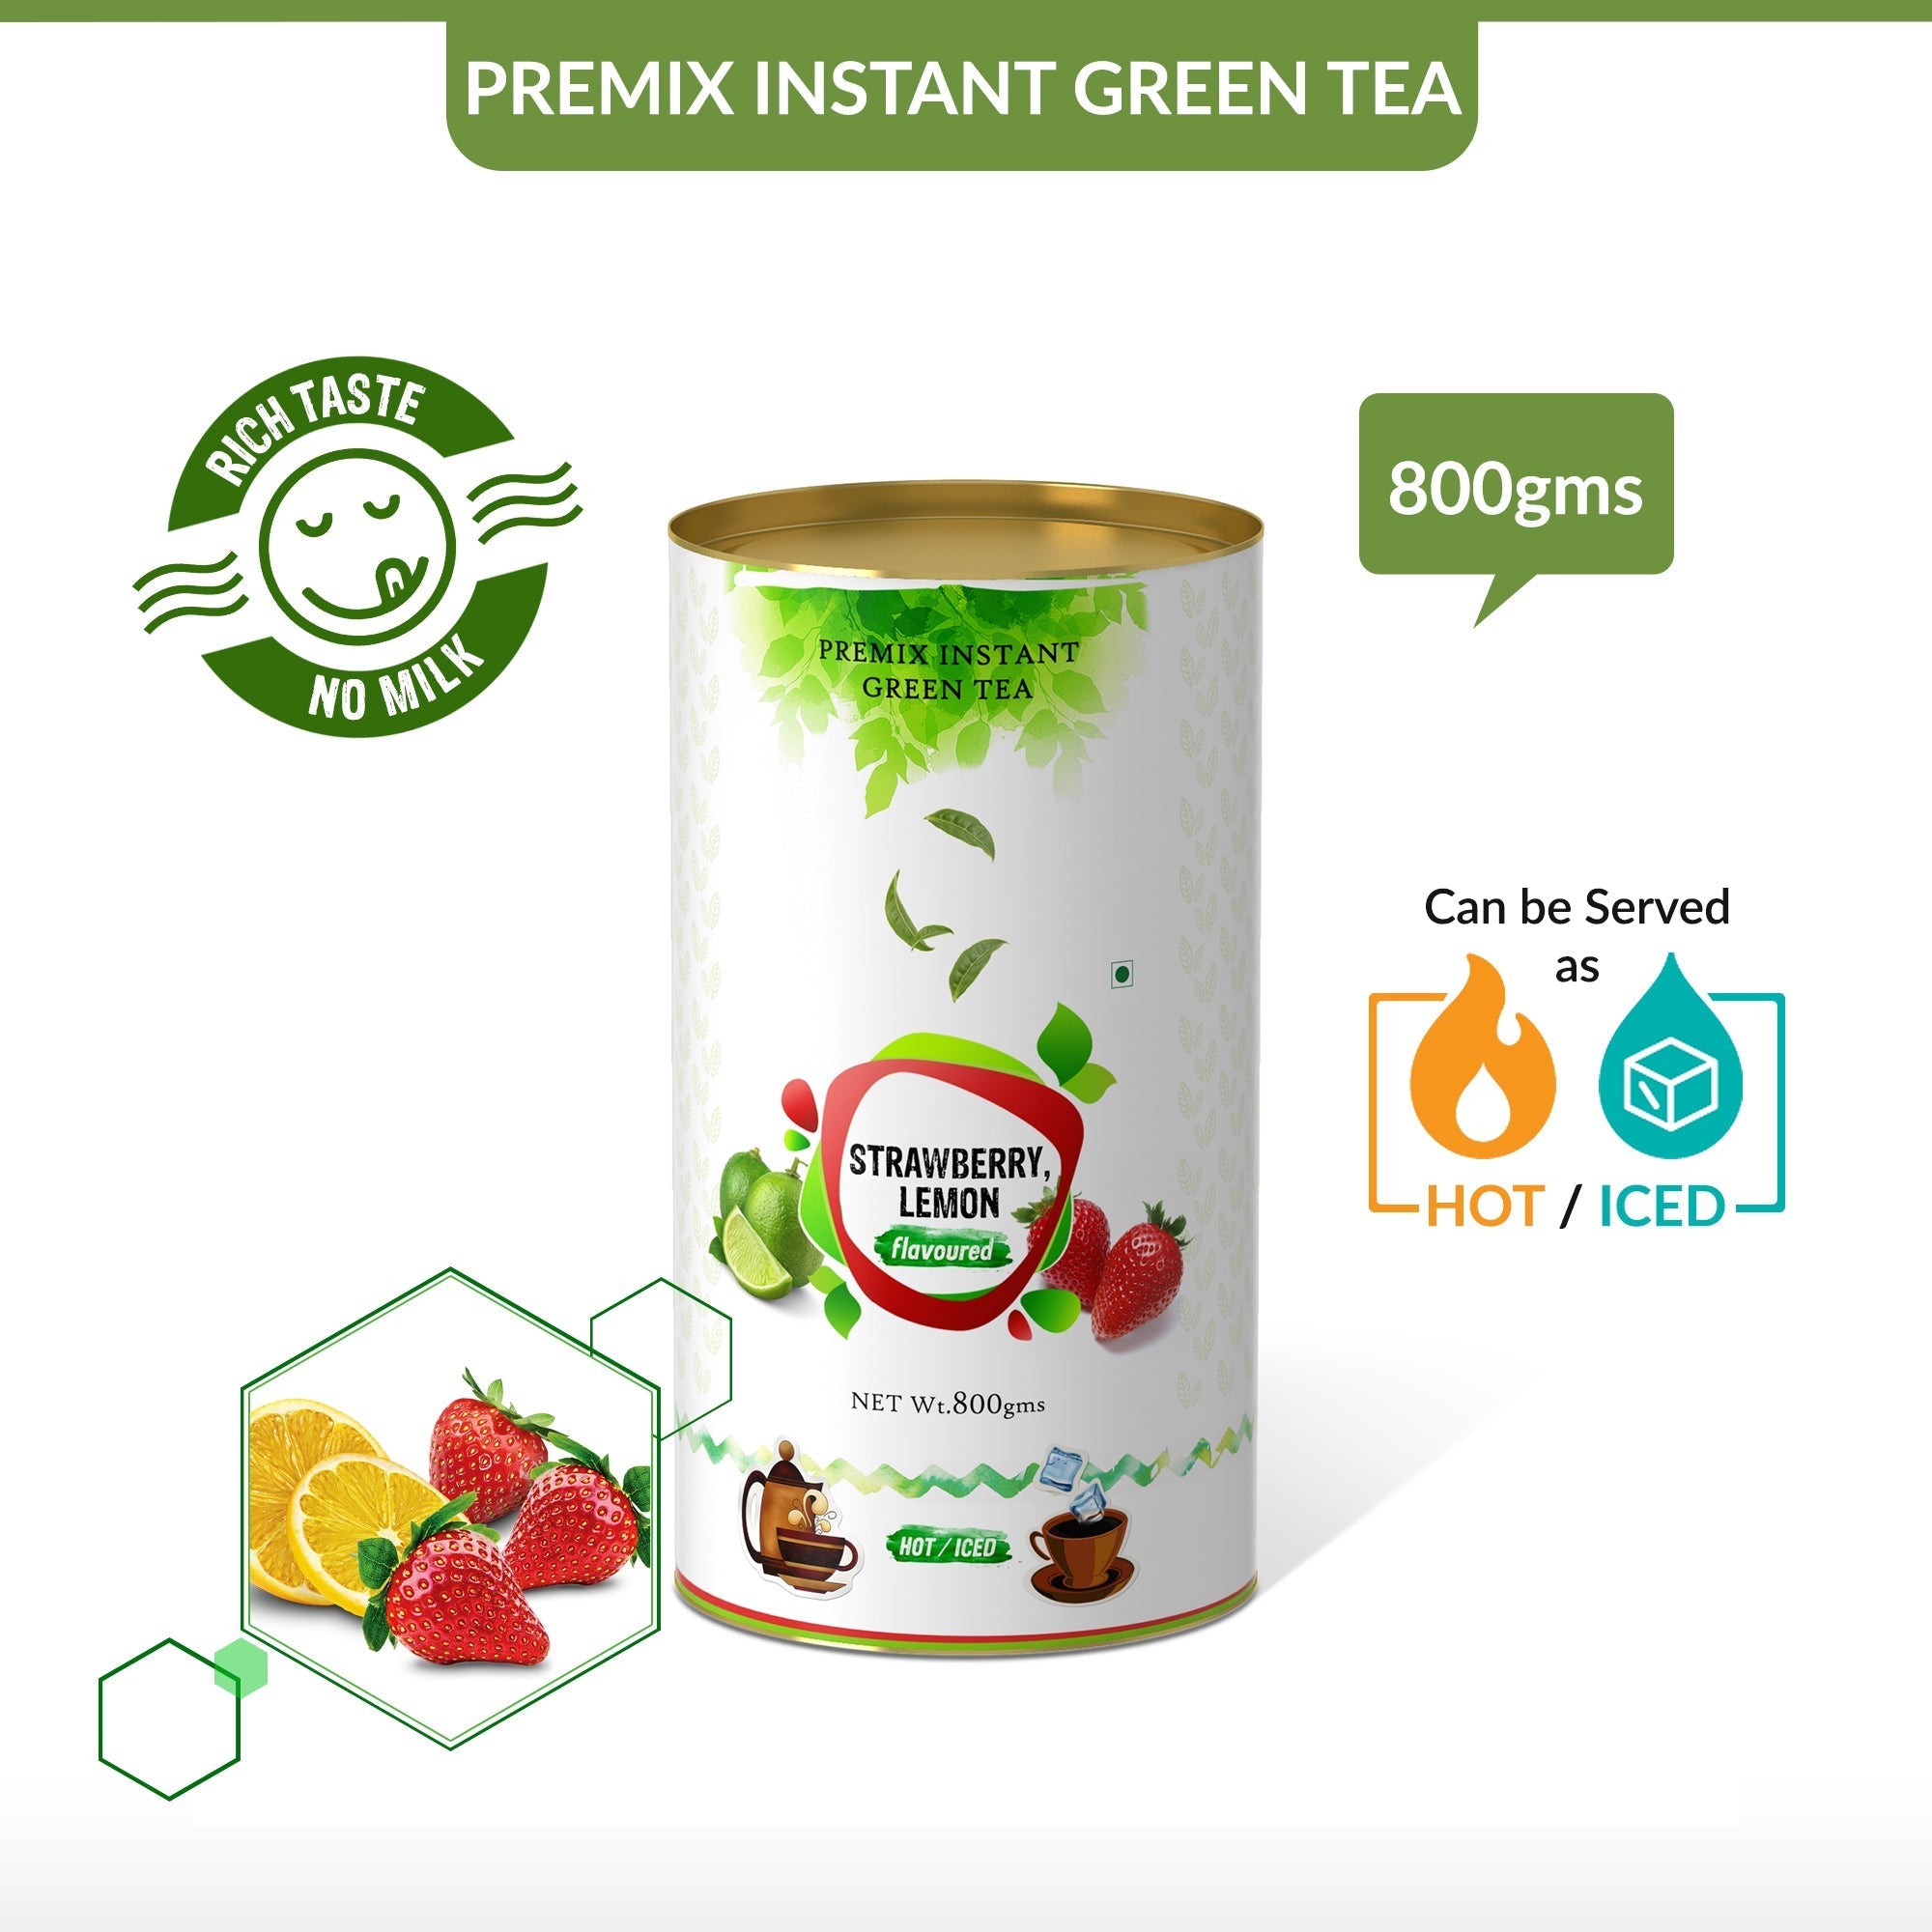 Strawberry Lemon Flavored Instant Green Tea - 400 gms